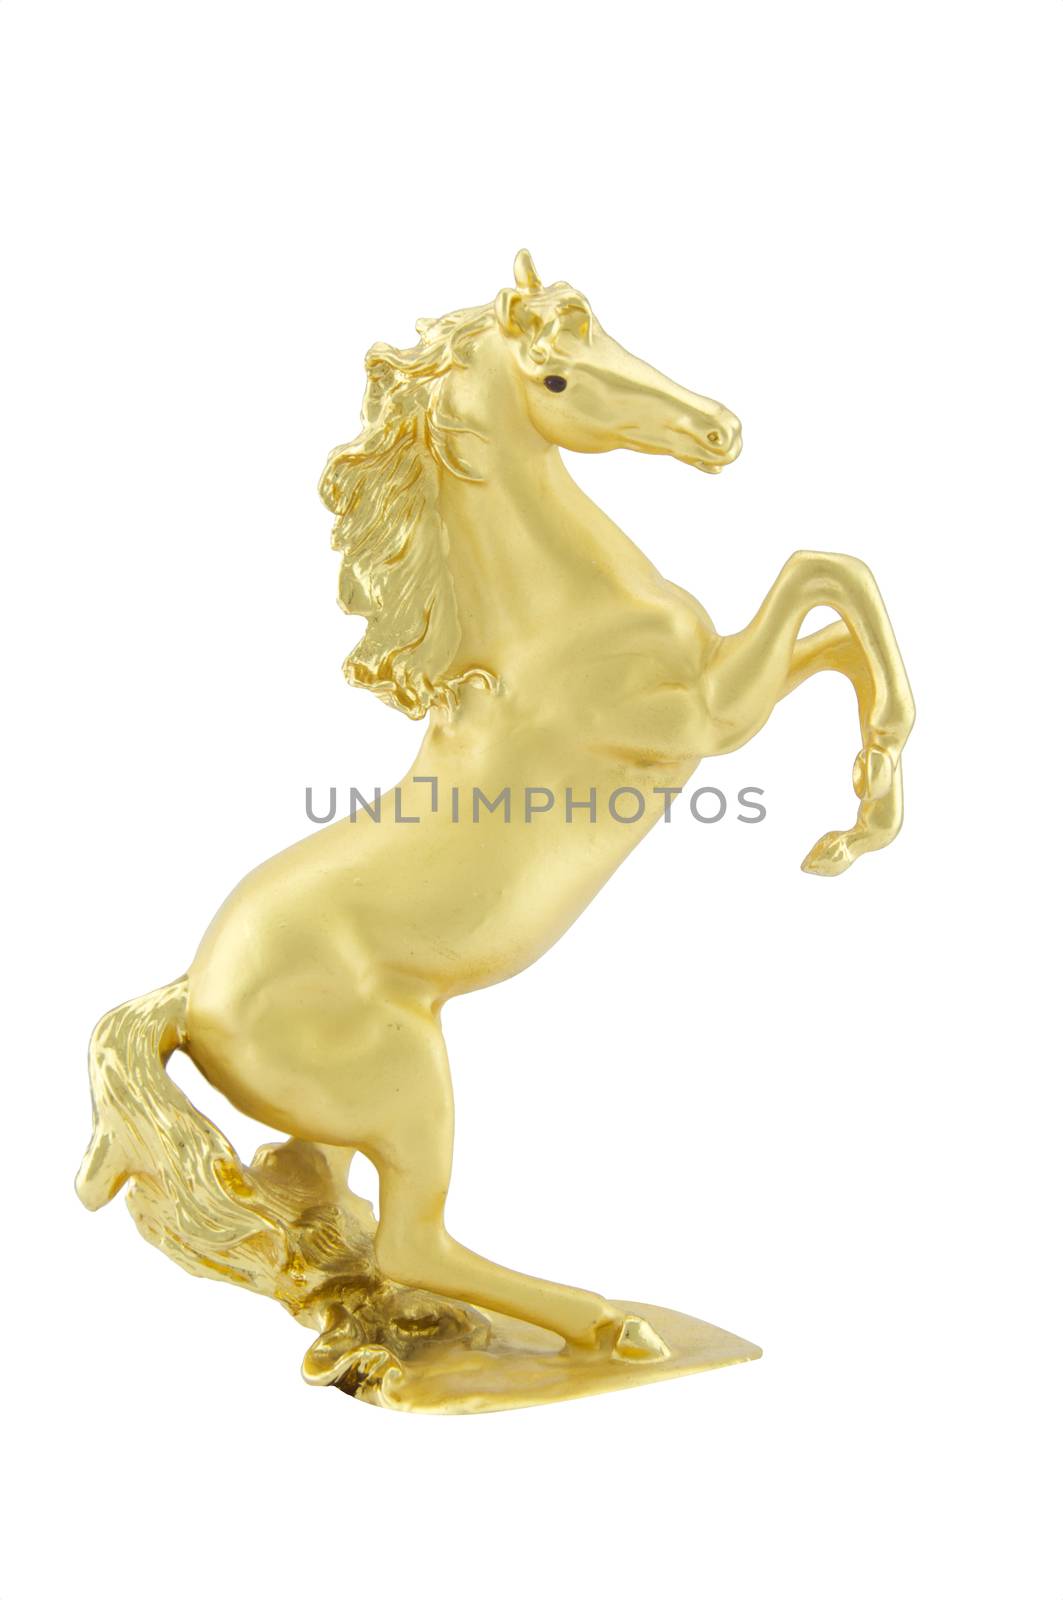 Golden horse figure by eaglesky